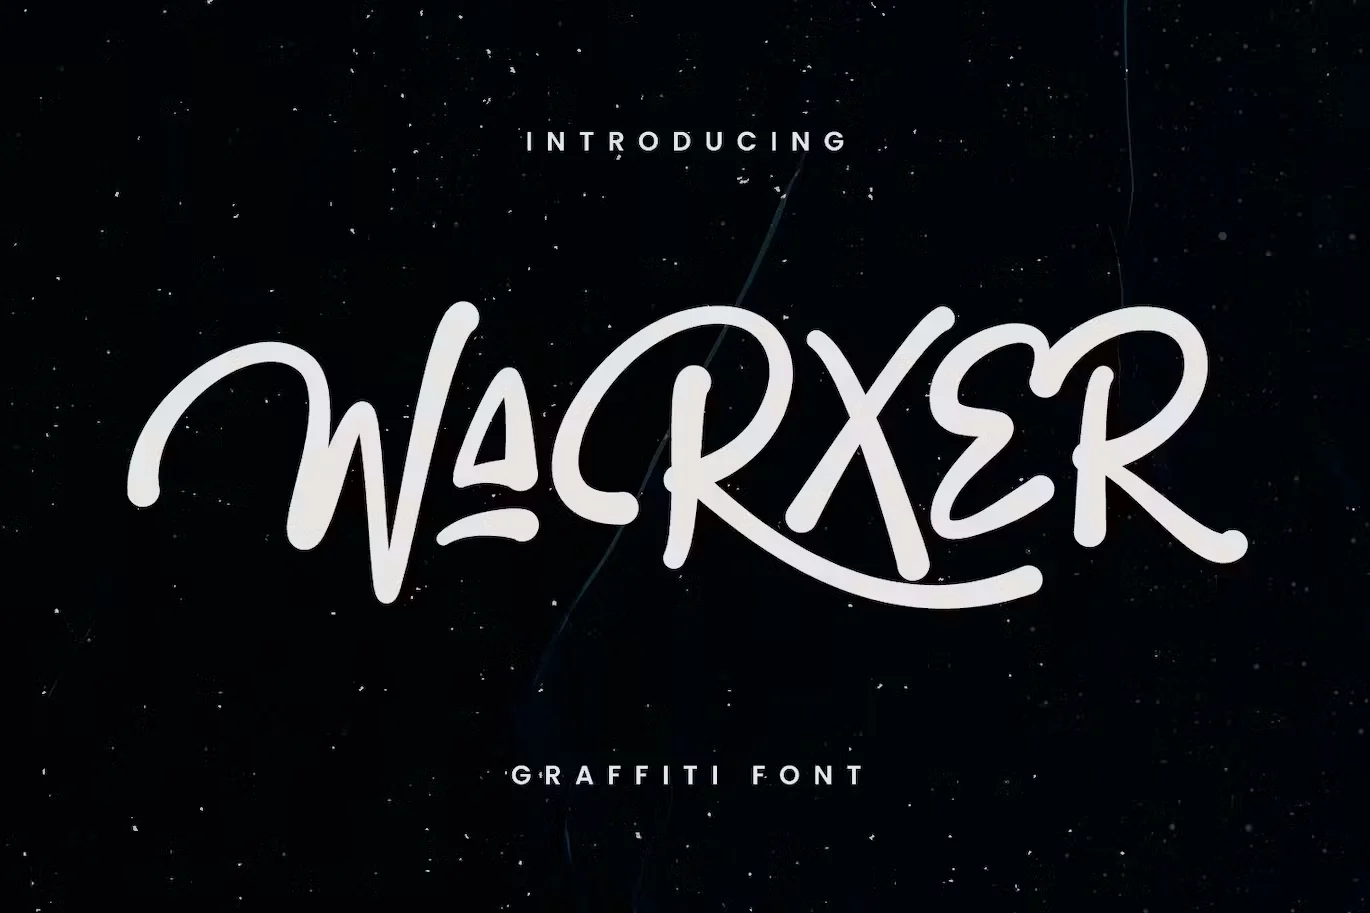 Warxer Graffiti Font